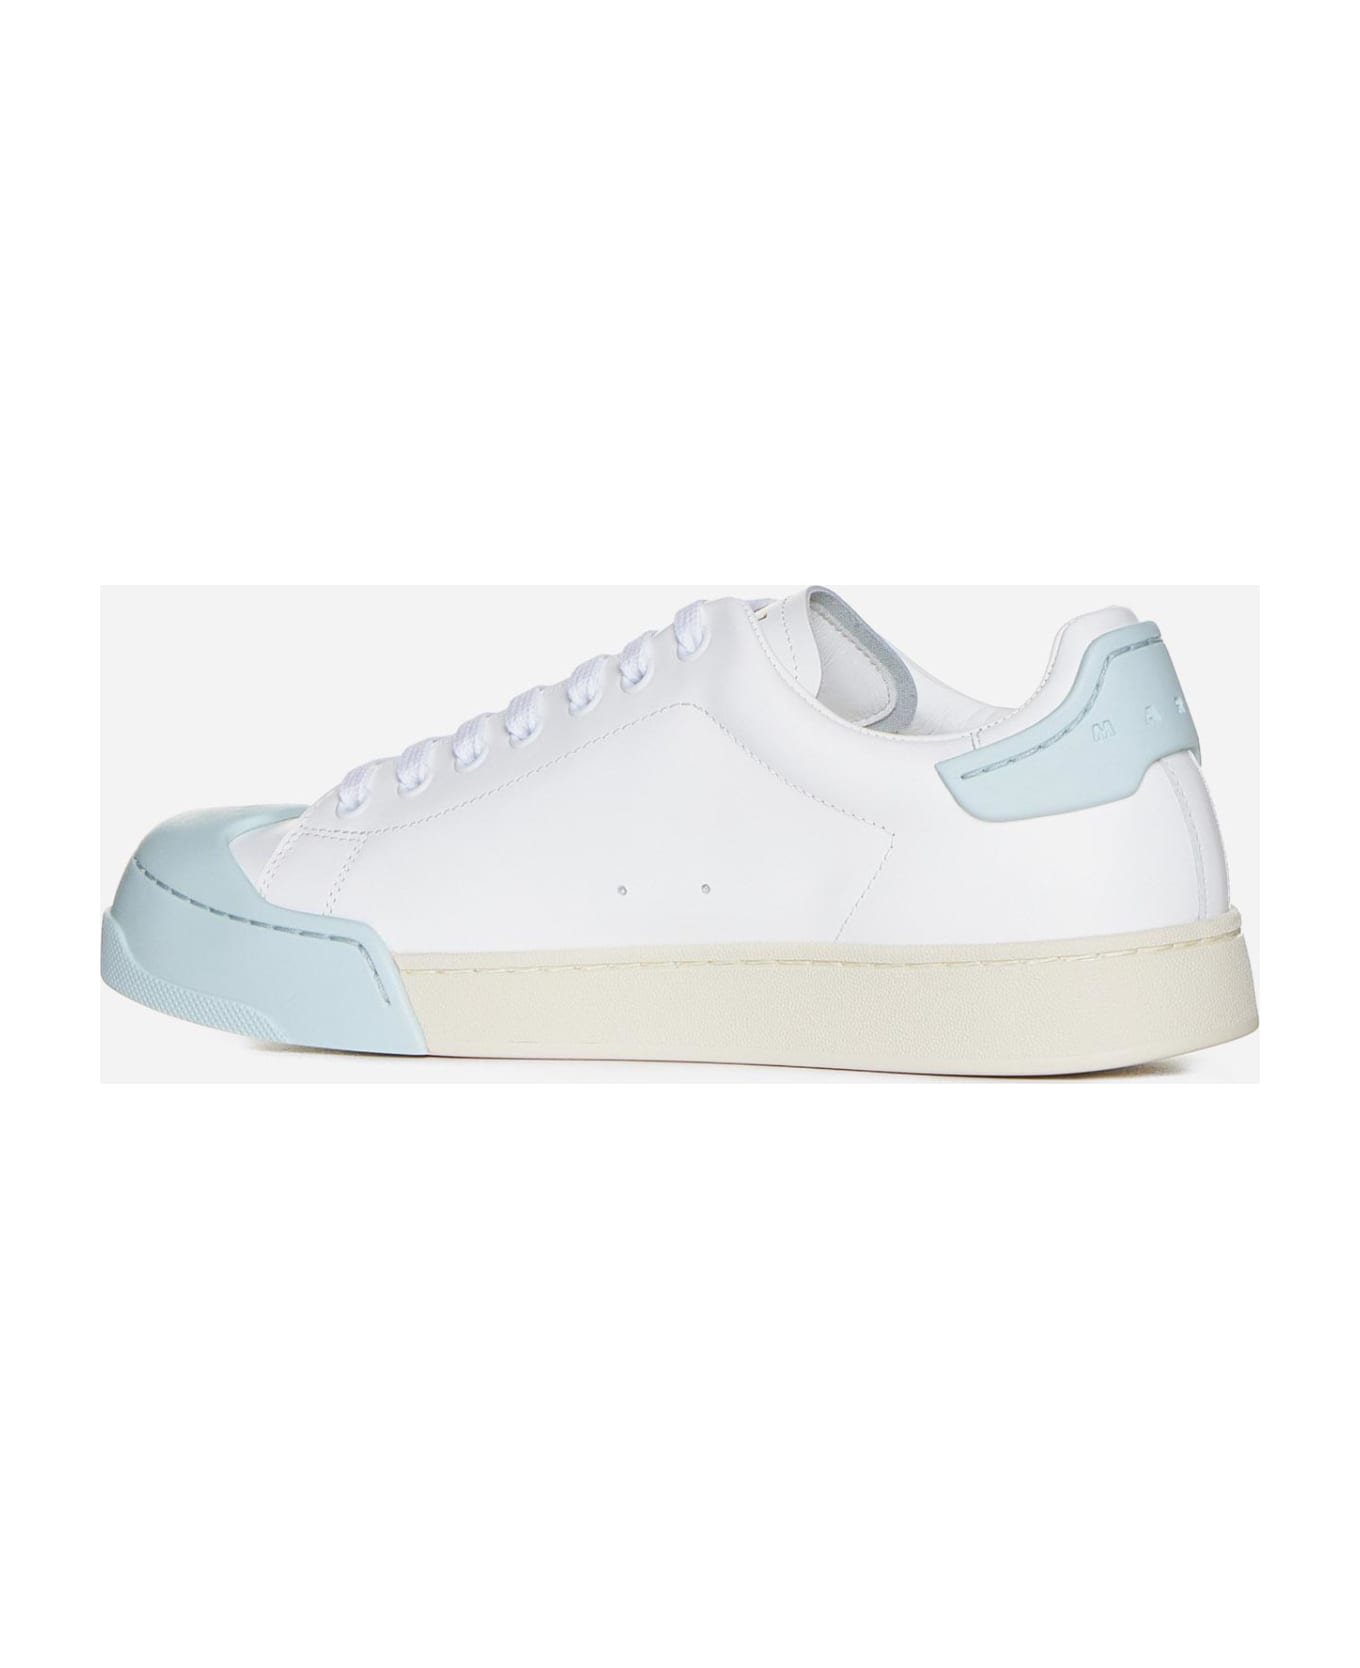 Marni Dada Bumper Leather Sneakers - White / light blue スニーカー